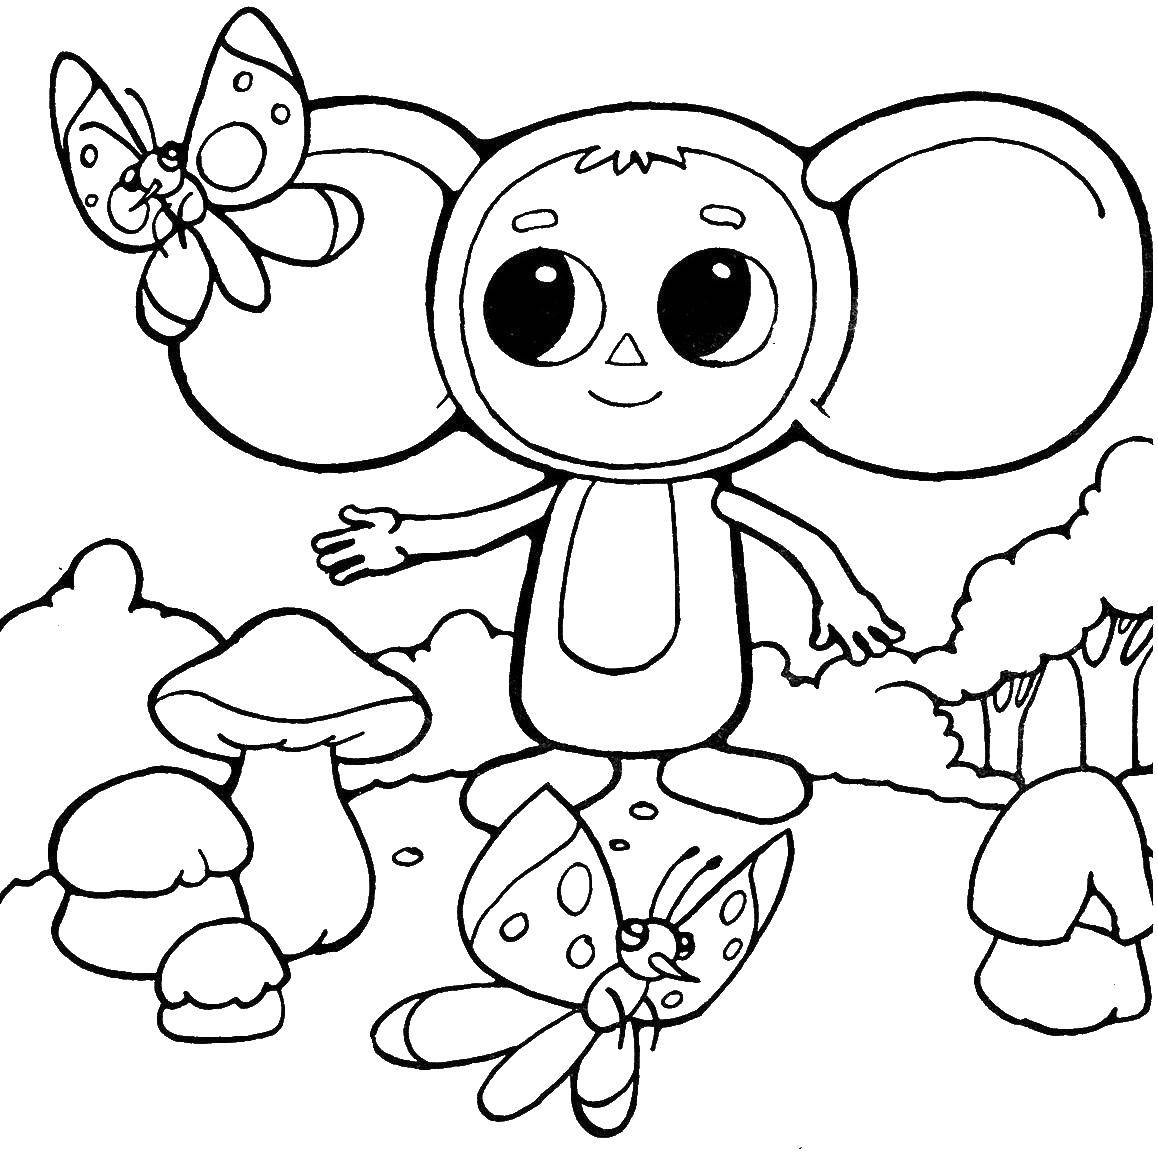 Coloring Cheburashka with butterflies. Category cartoons. Tags:  Cheburashka.